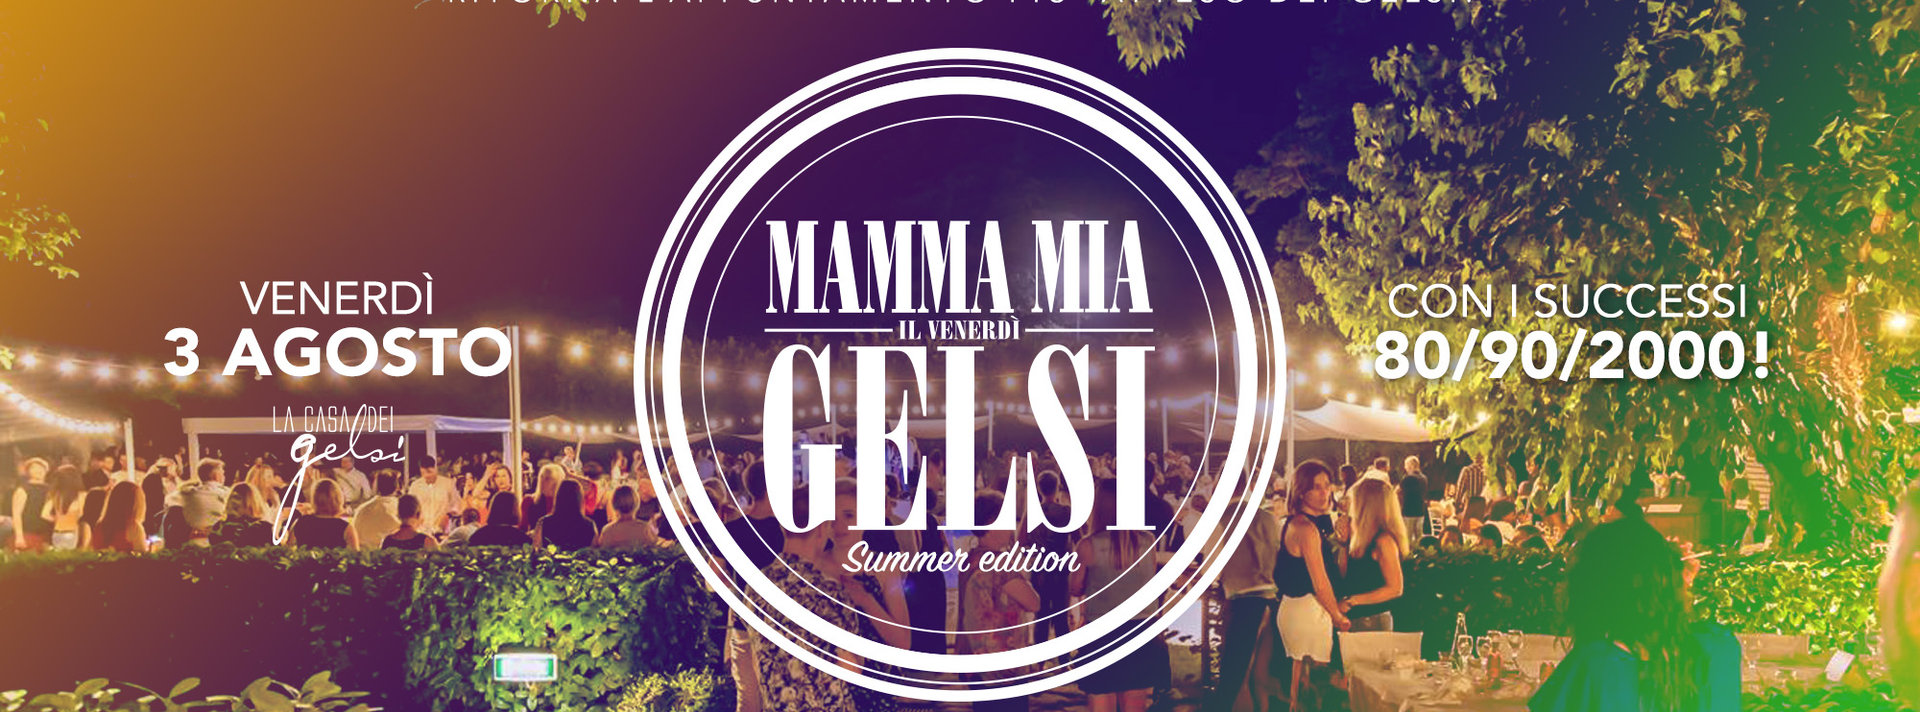 Mammamia Gelsi estate - 3 agosto 2018